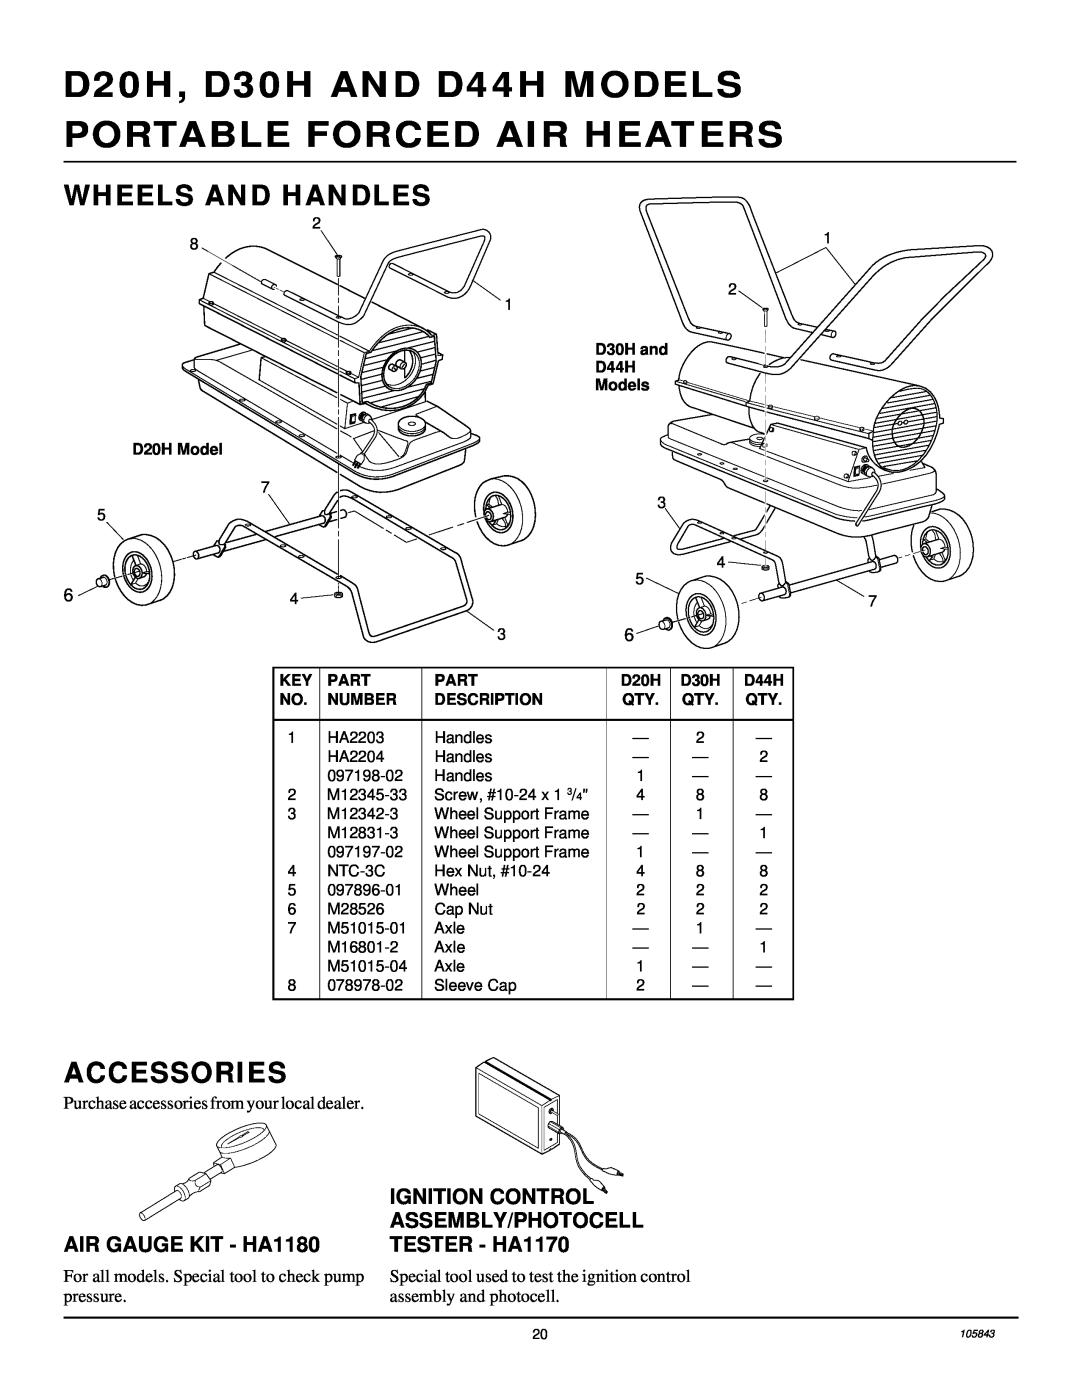 Desa D20H, D44H, D30H owner manual Wheels And Handles, Accessories, AIR GAUGE KIT - HA1180 